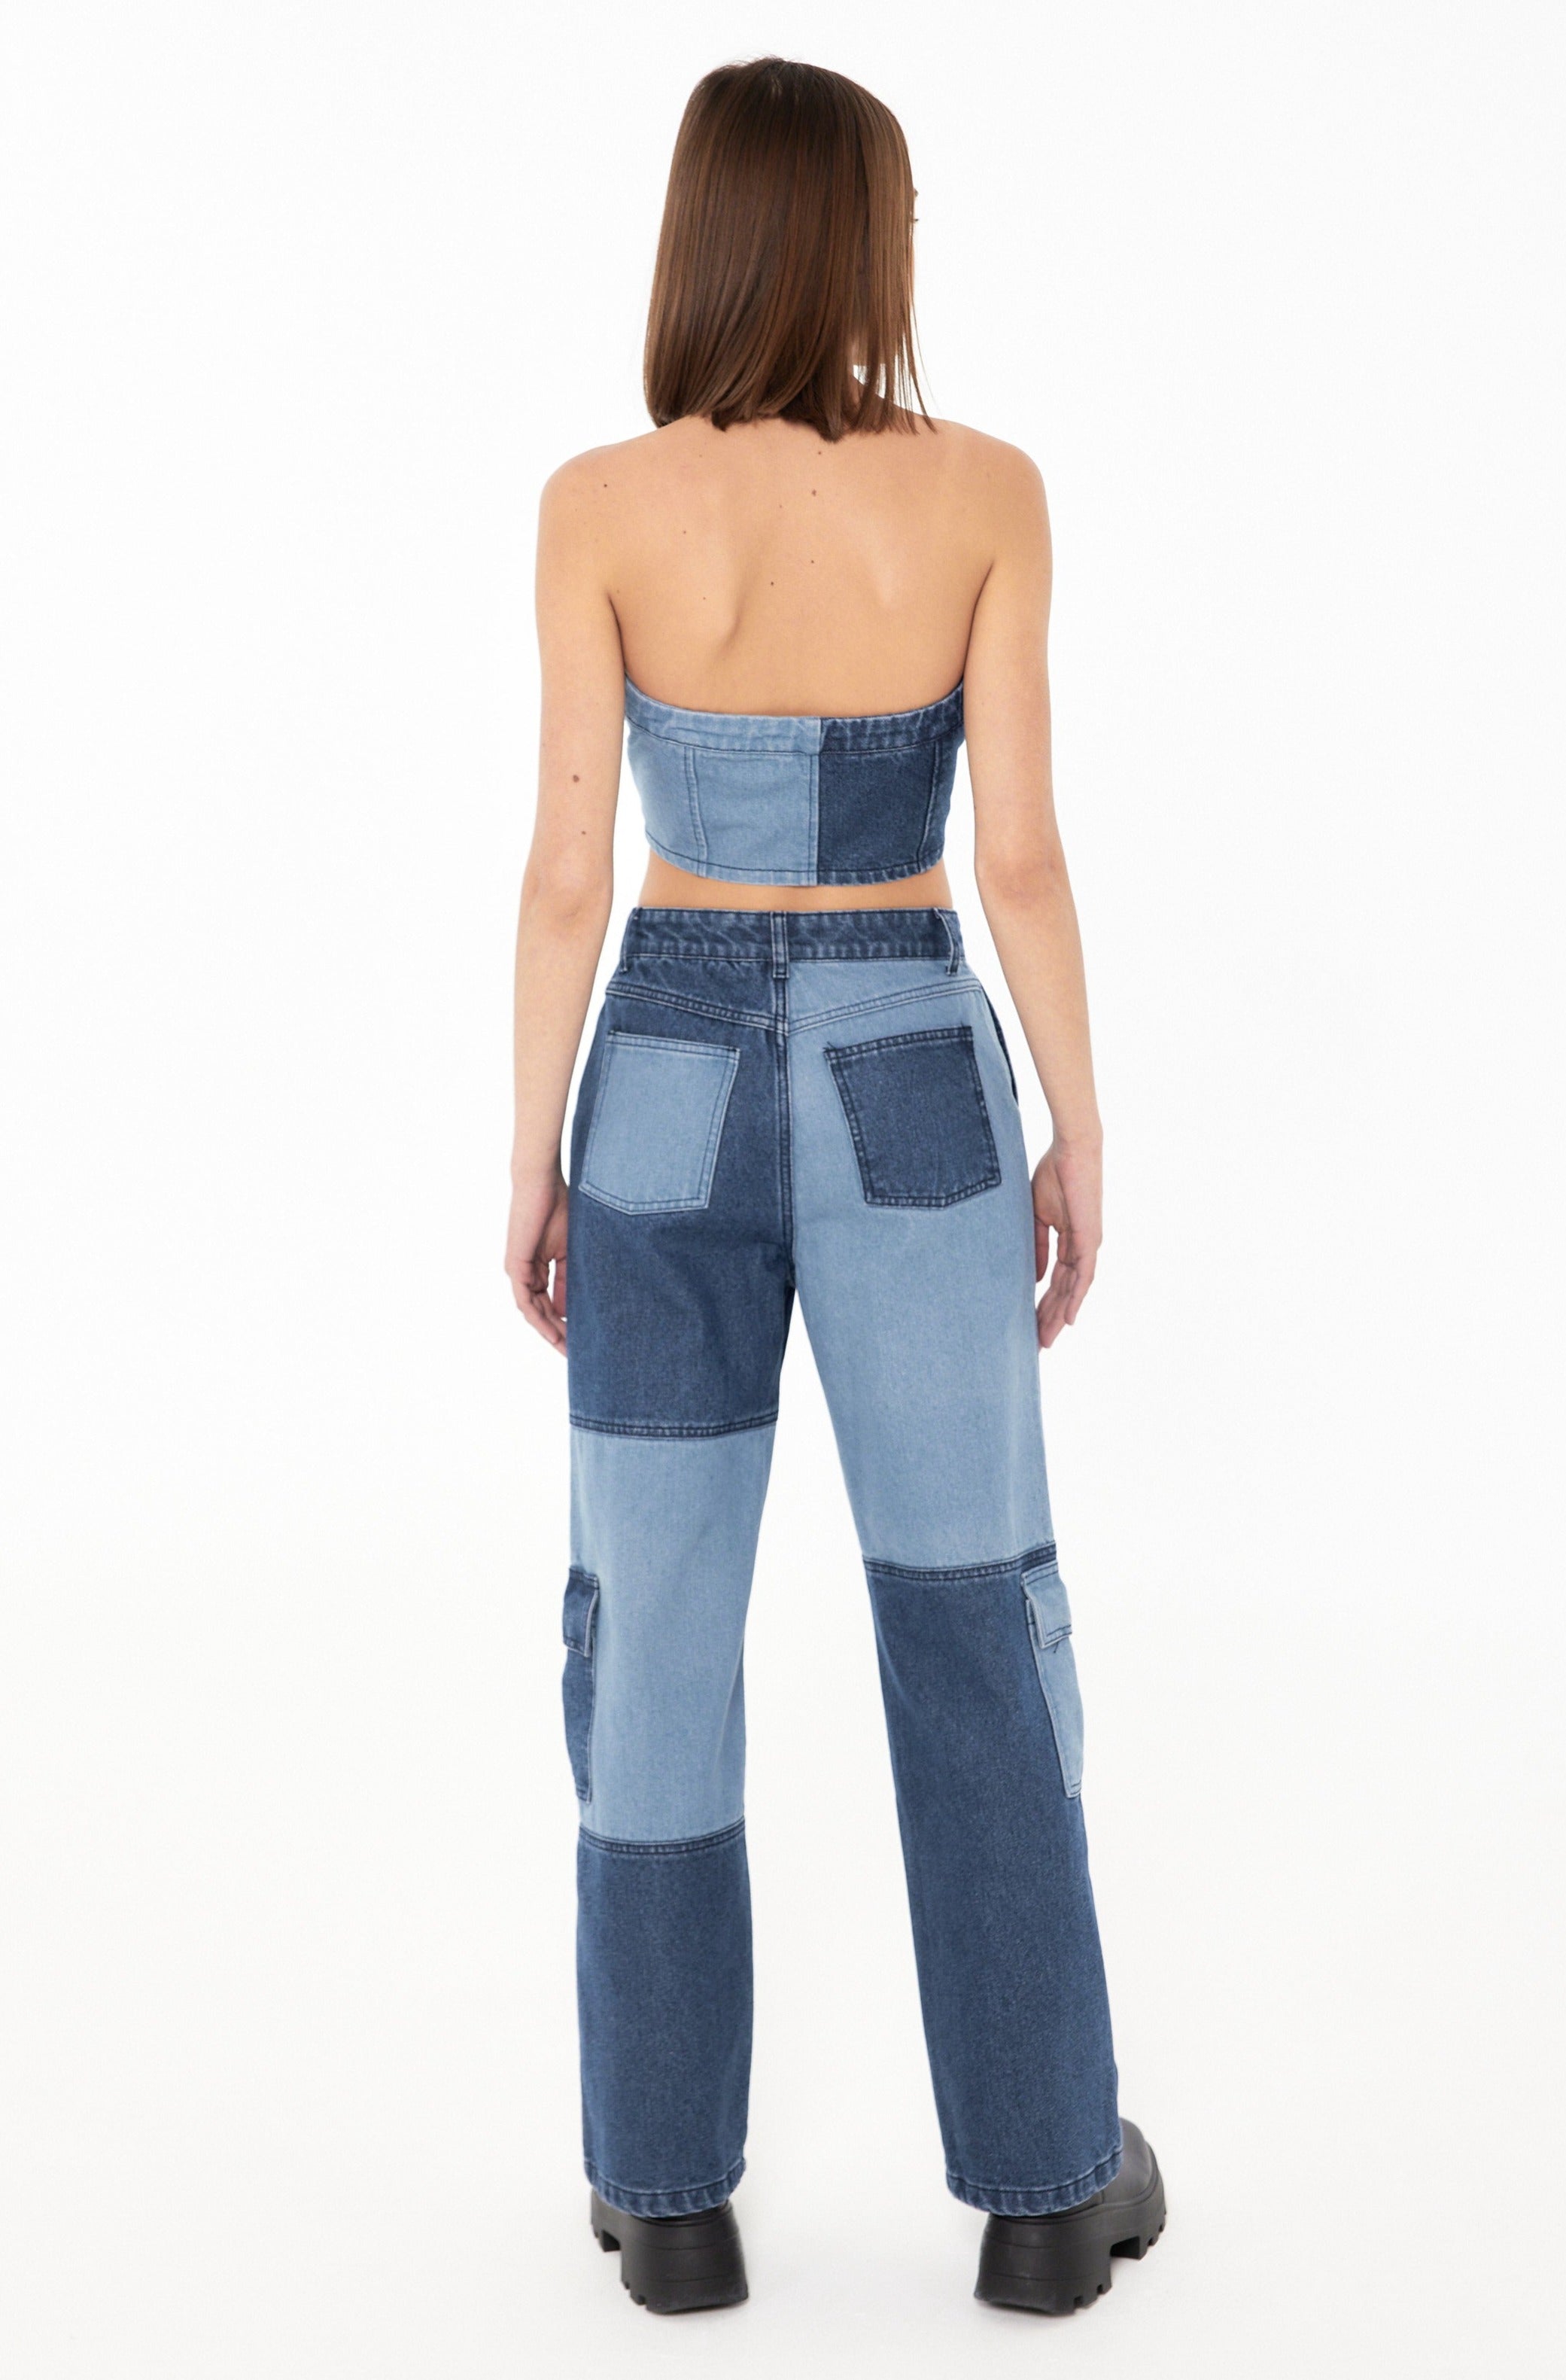 YIYINGSI Men'S Tactical Denim Pants - Comfortable Breathable Commuter Swat Combat  Jeans Cargo Pants, Male Multi-Pocket Wear-Resistant Army Casual  Joggers,Blue,L : Amazon.co.uk: Fashion